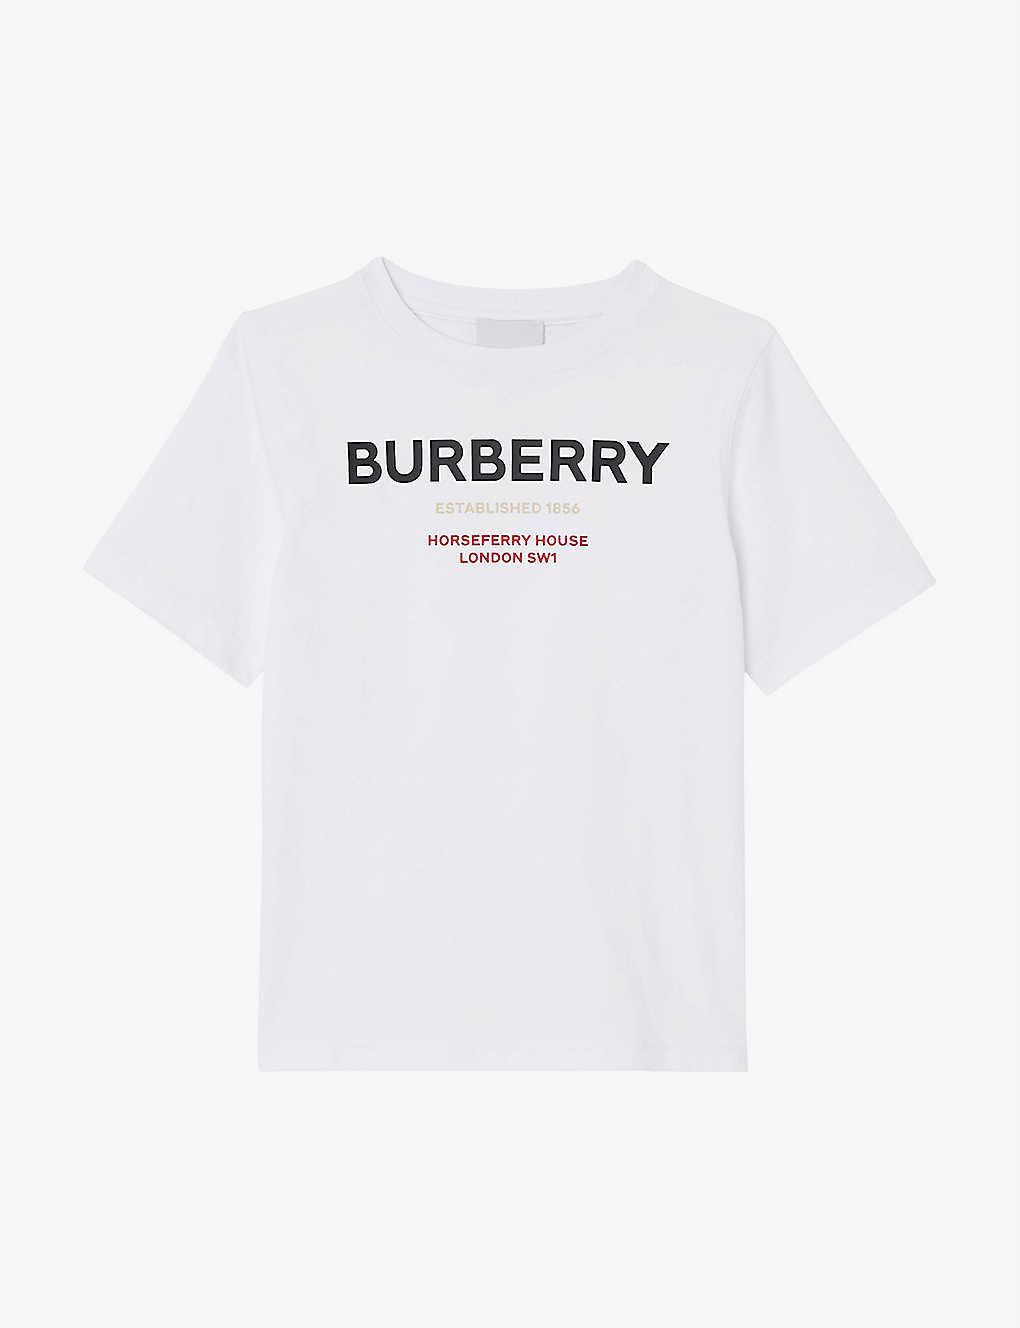 Burberry T-shirt  Kids Colour White